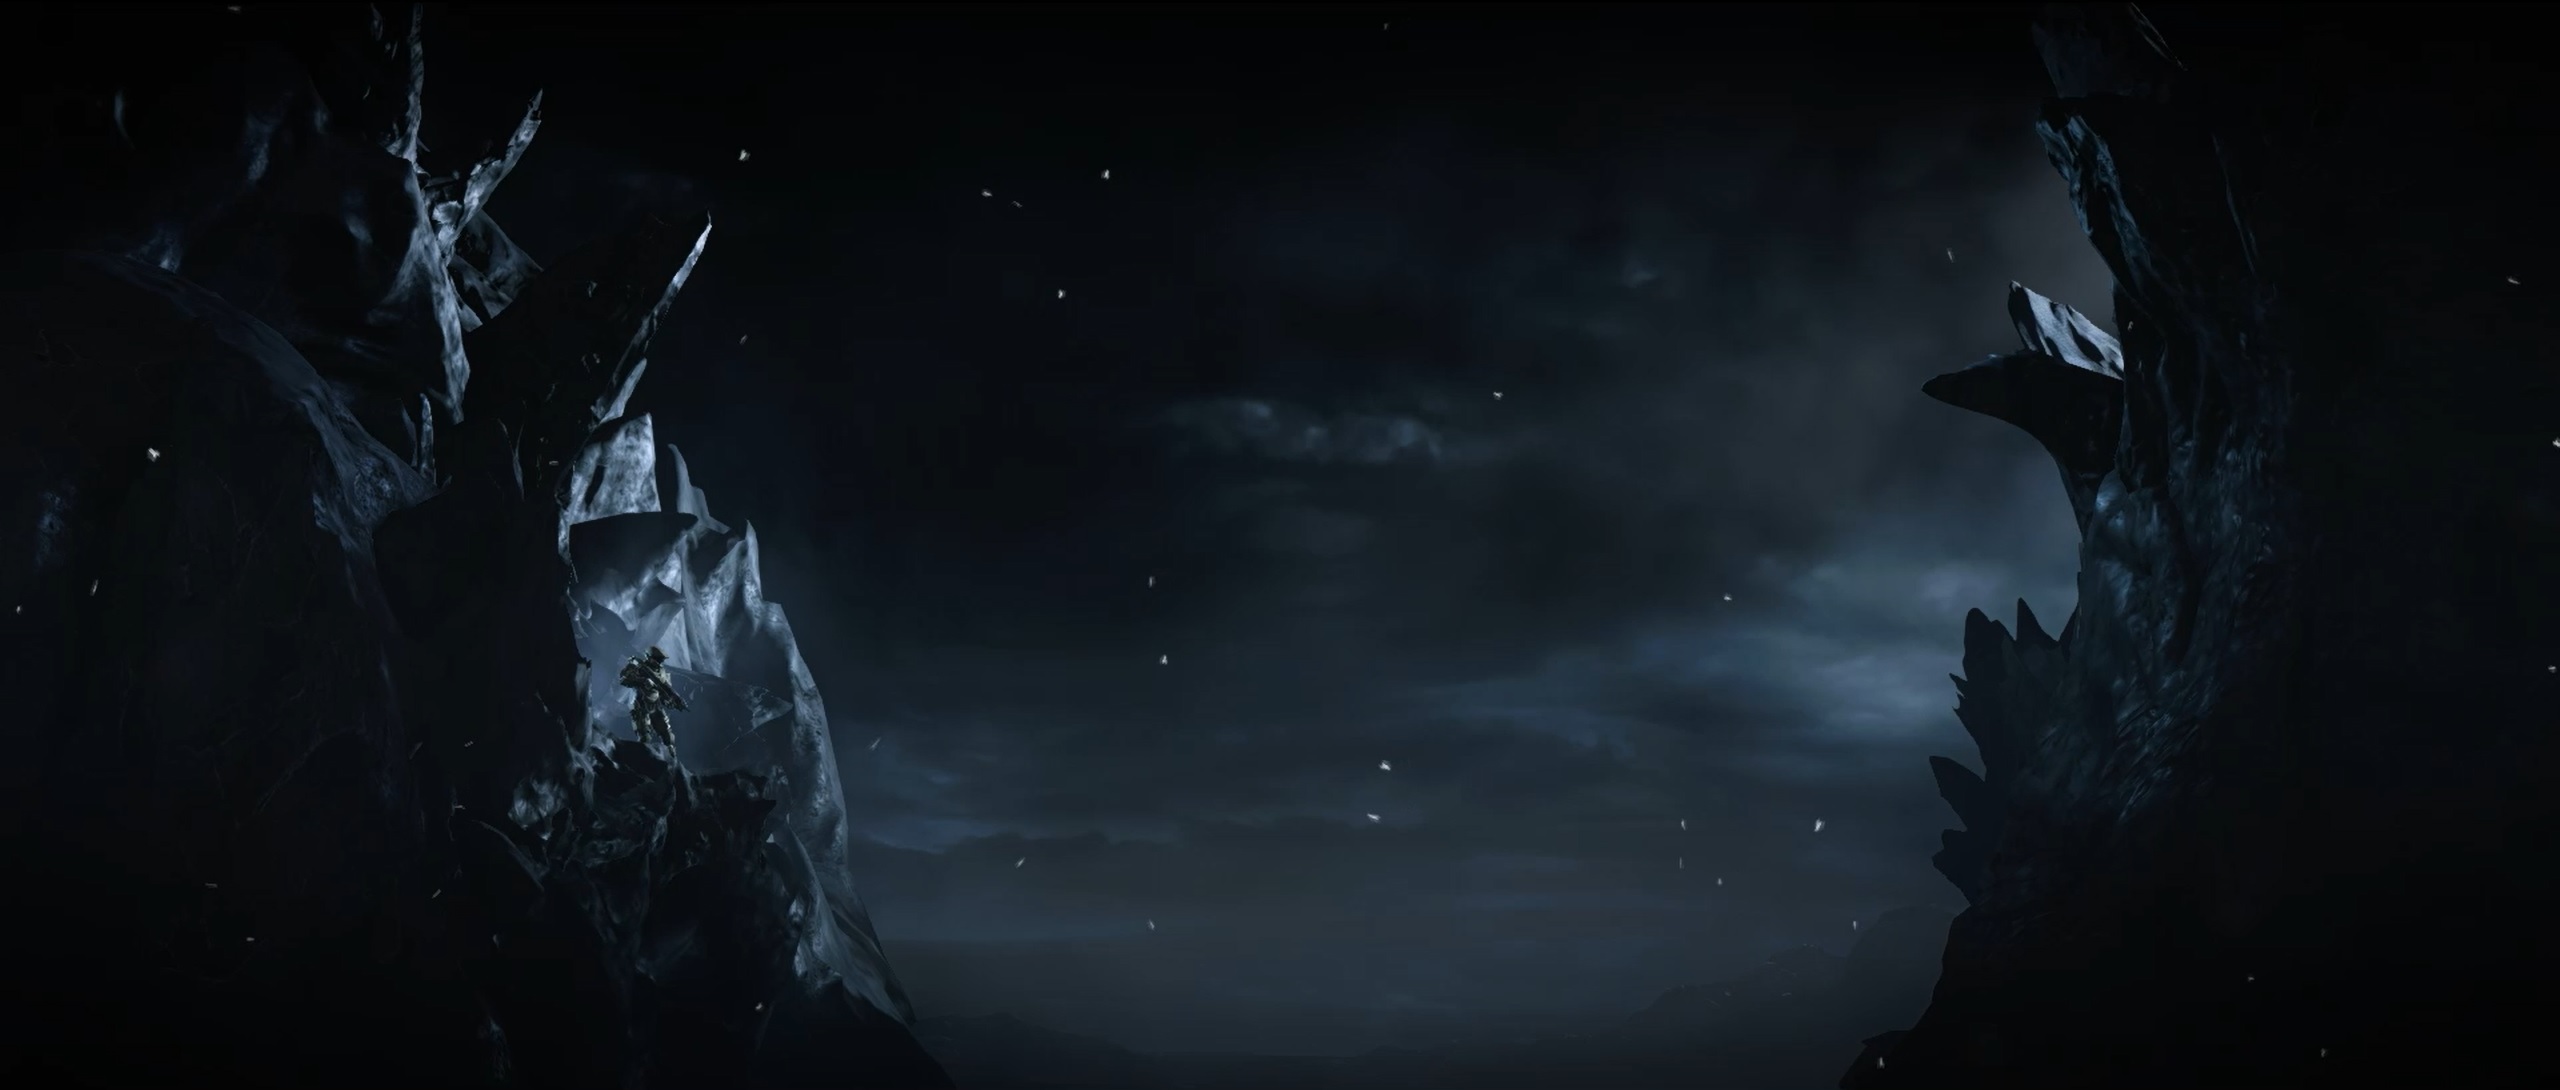 Halo 5 screenshot of John-117 experiencing a vision of the Domain